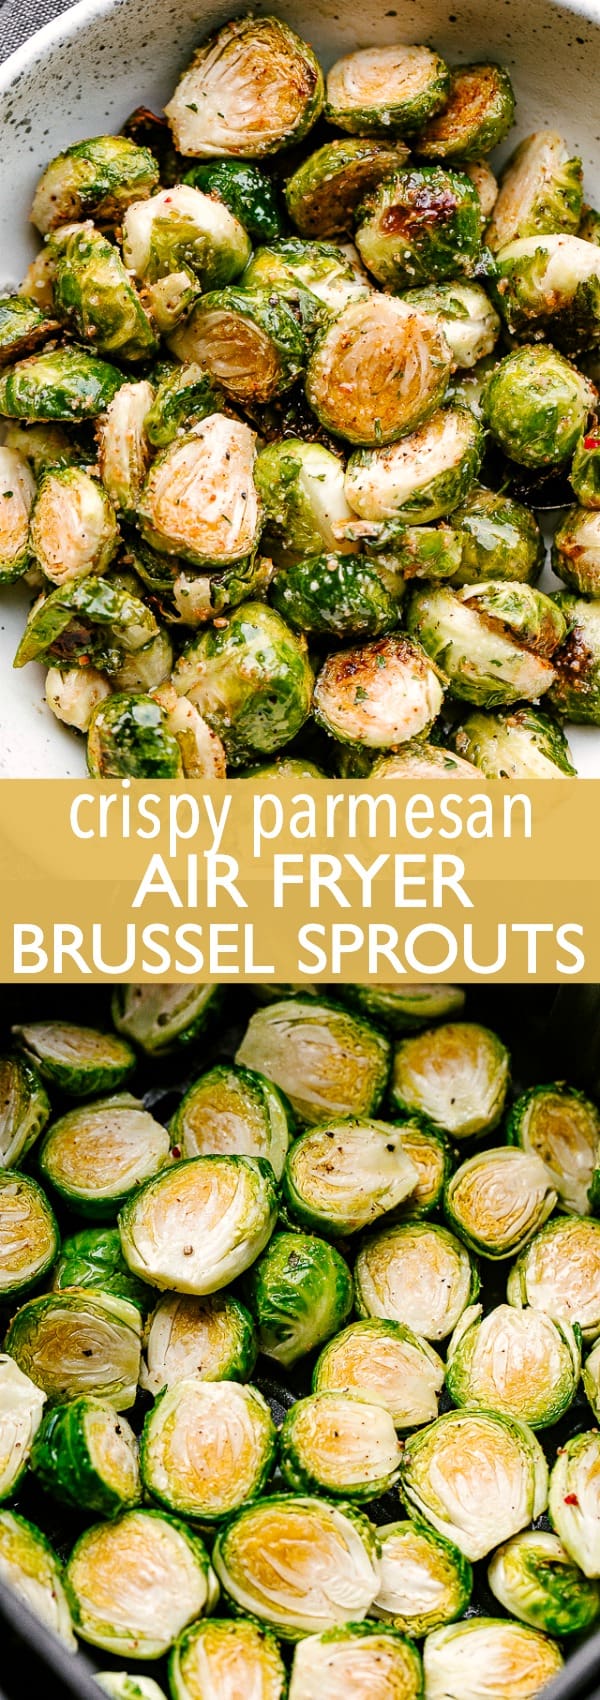 Crispy Parmesan Air Fryer Brussel Sprouts Recipe | Diethood